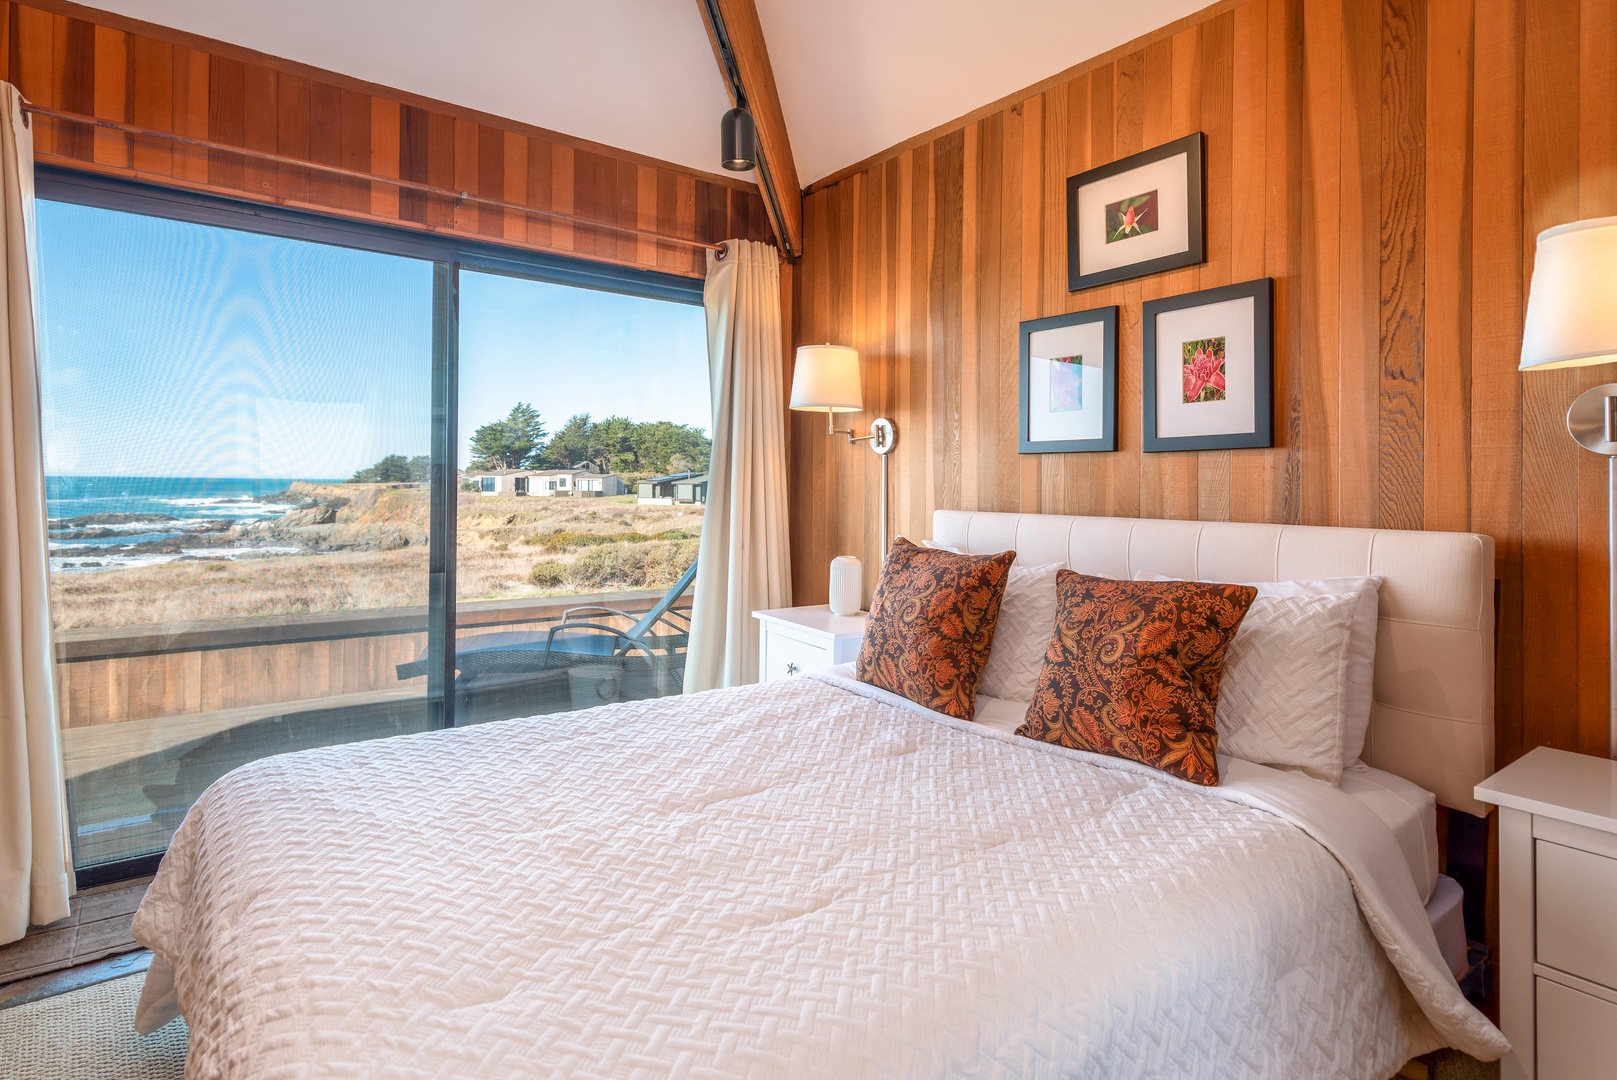 Bedroom 3: Queen bed with deck access and ocean views